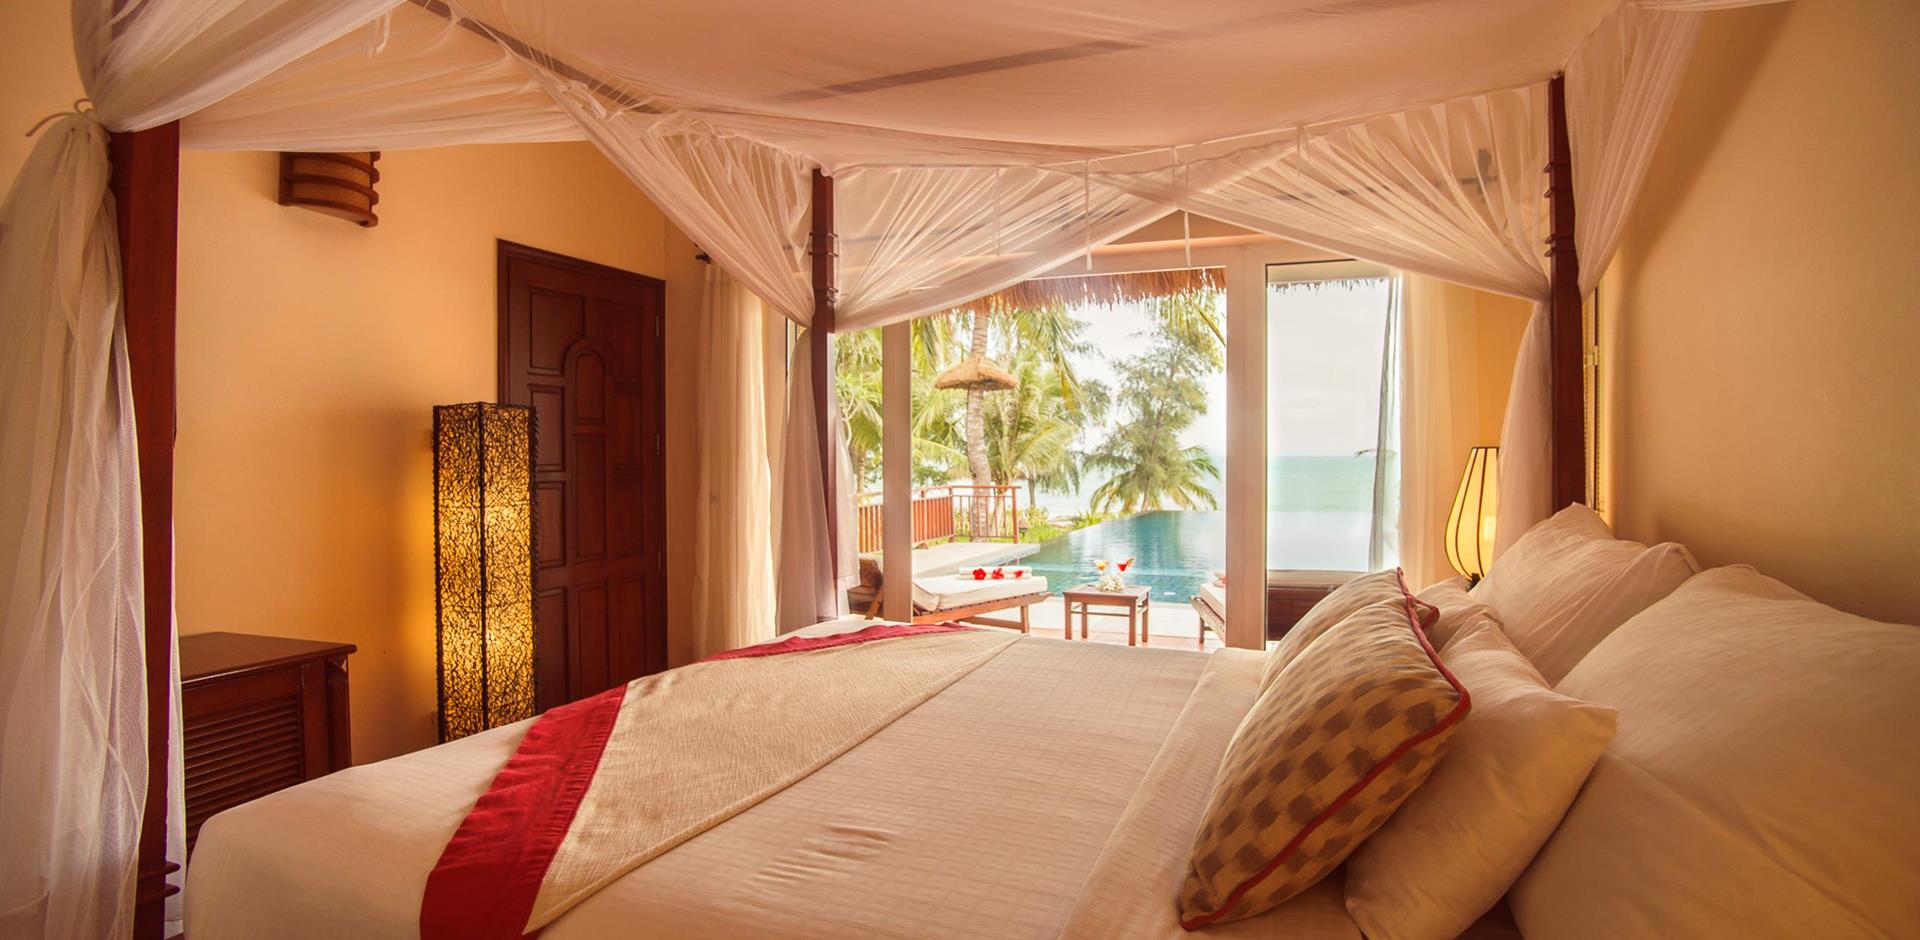 Bedroom, Victora Phan Thiet Beach Resort & Spa, Vietnam